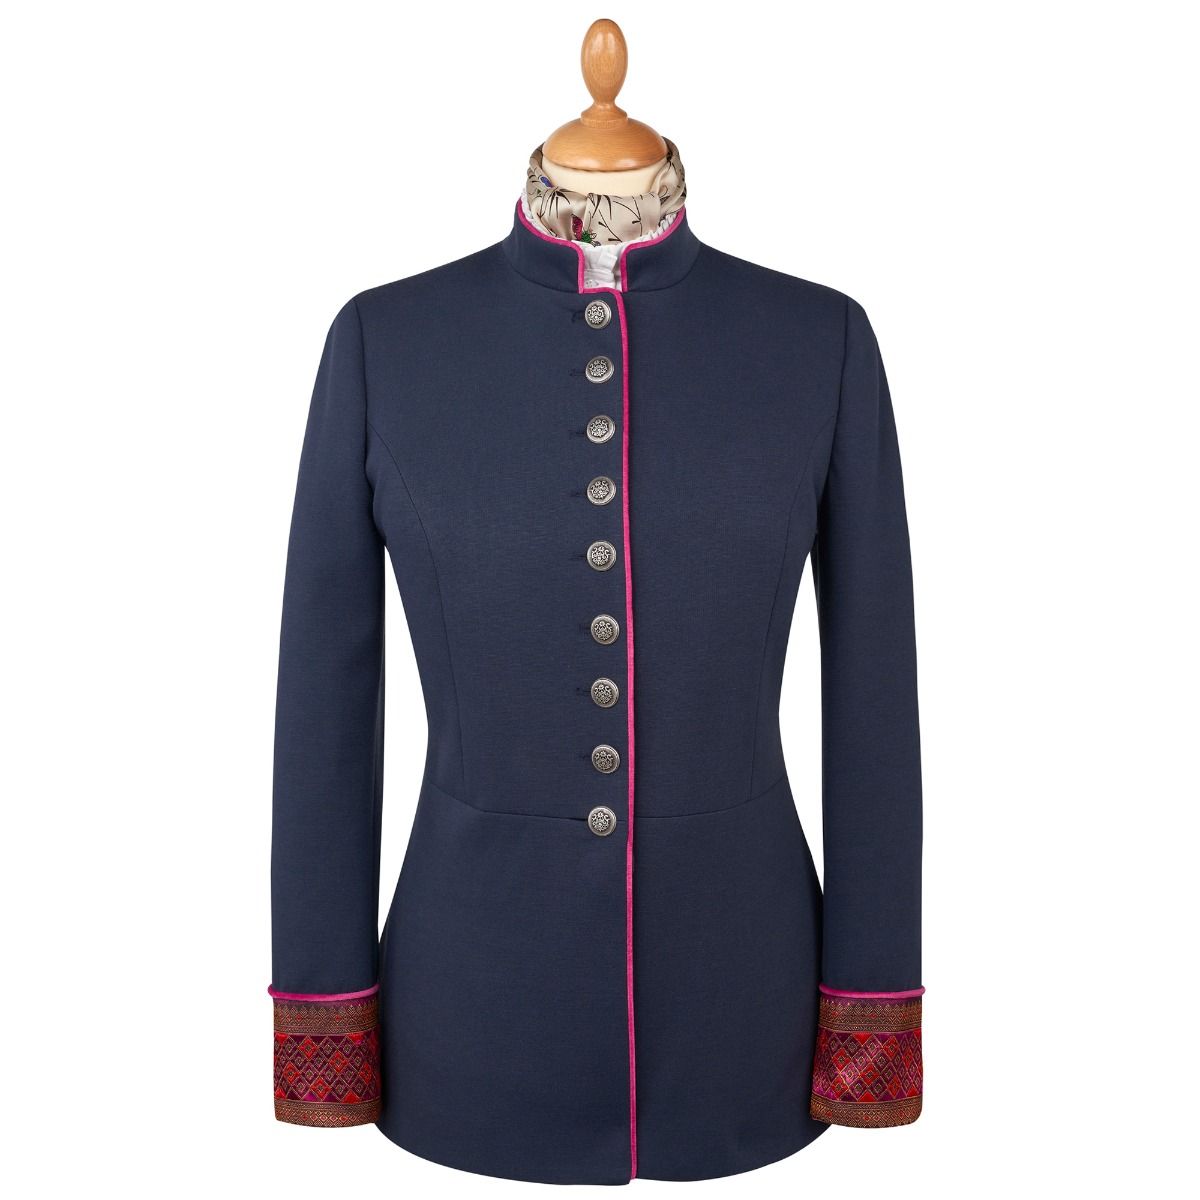 AO Blazer Uniform Stil  Knöpfe Military  Casual Jacke Marine  Blau L 40 